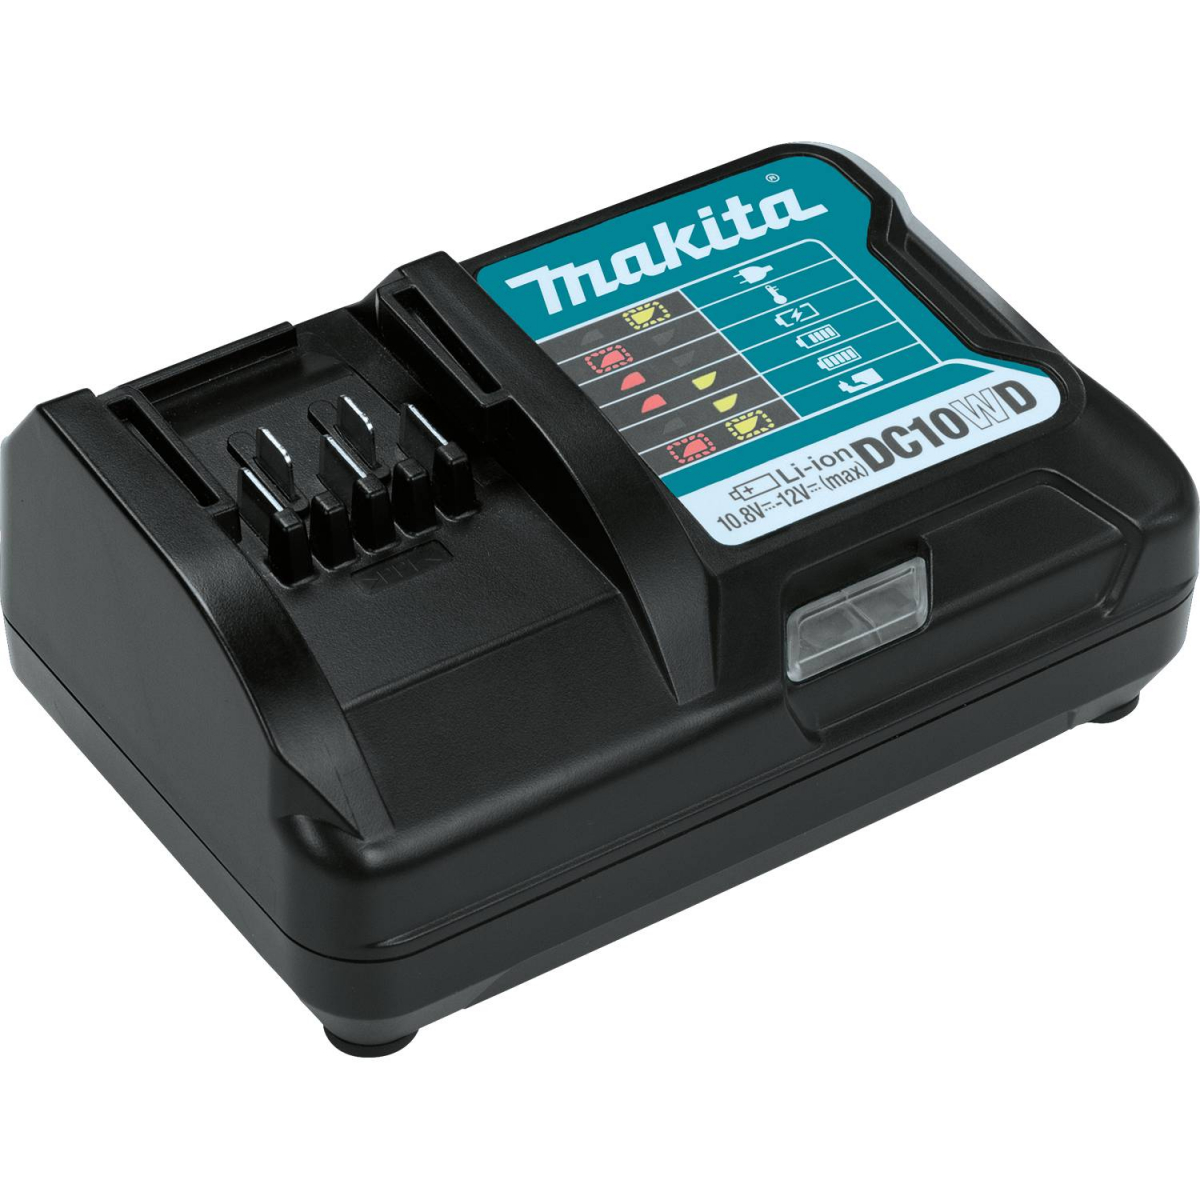 MAKITA Chargeur batterie Lithium 7,2V et 10,8V - DC10WA - 194597-0